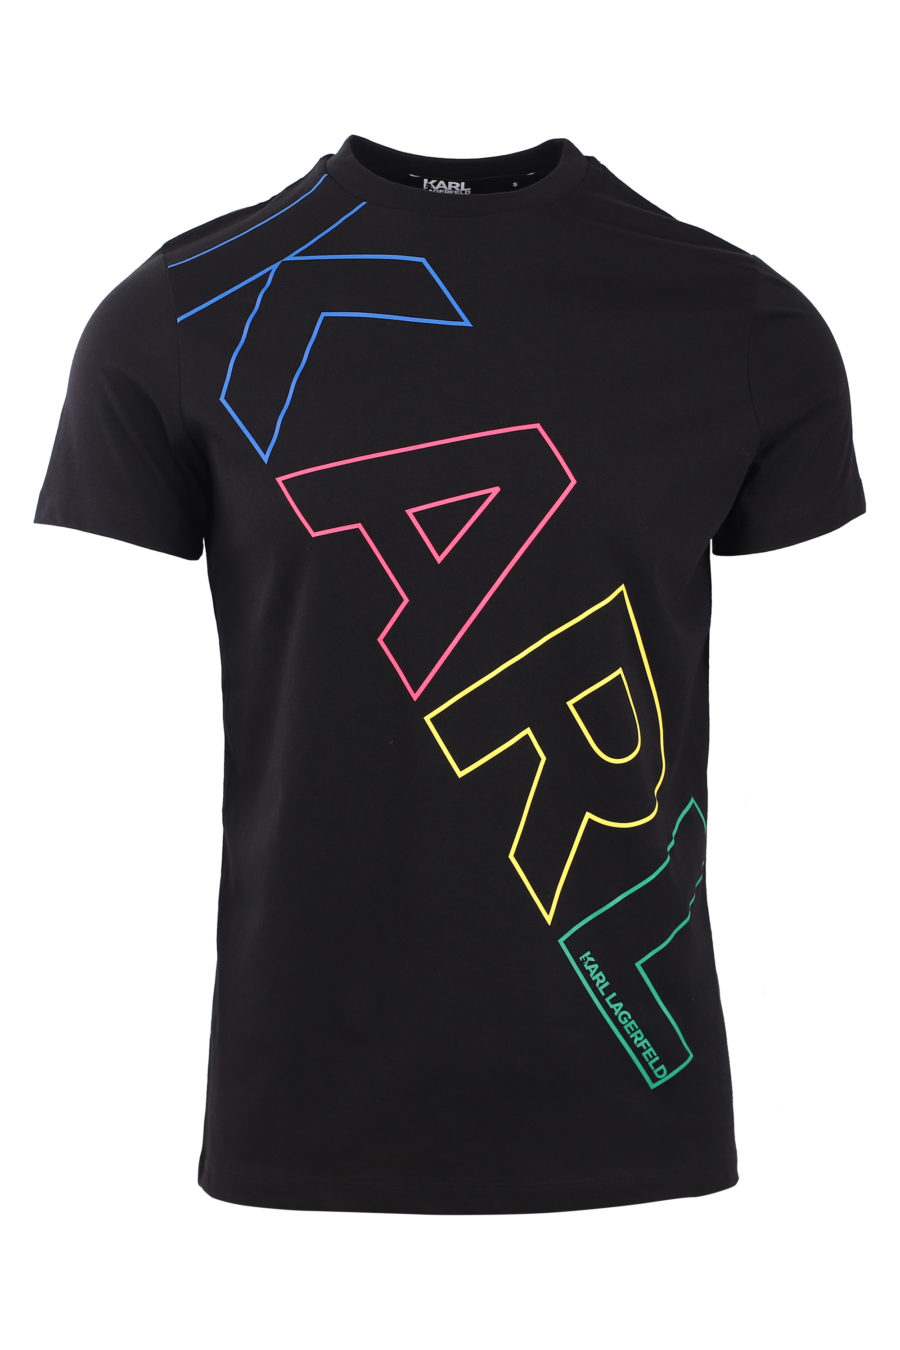 Camiseta negra con maxi logo multicolor - IMG 0796